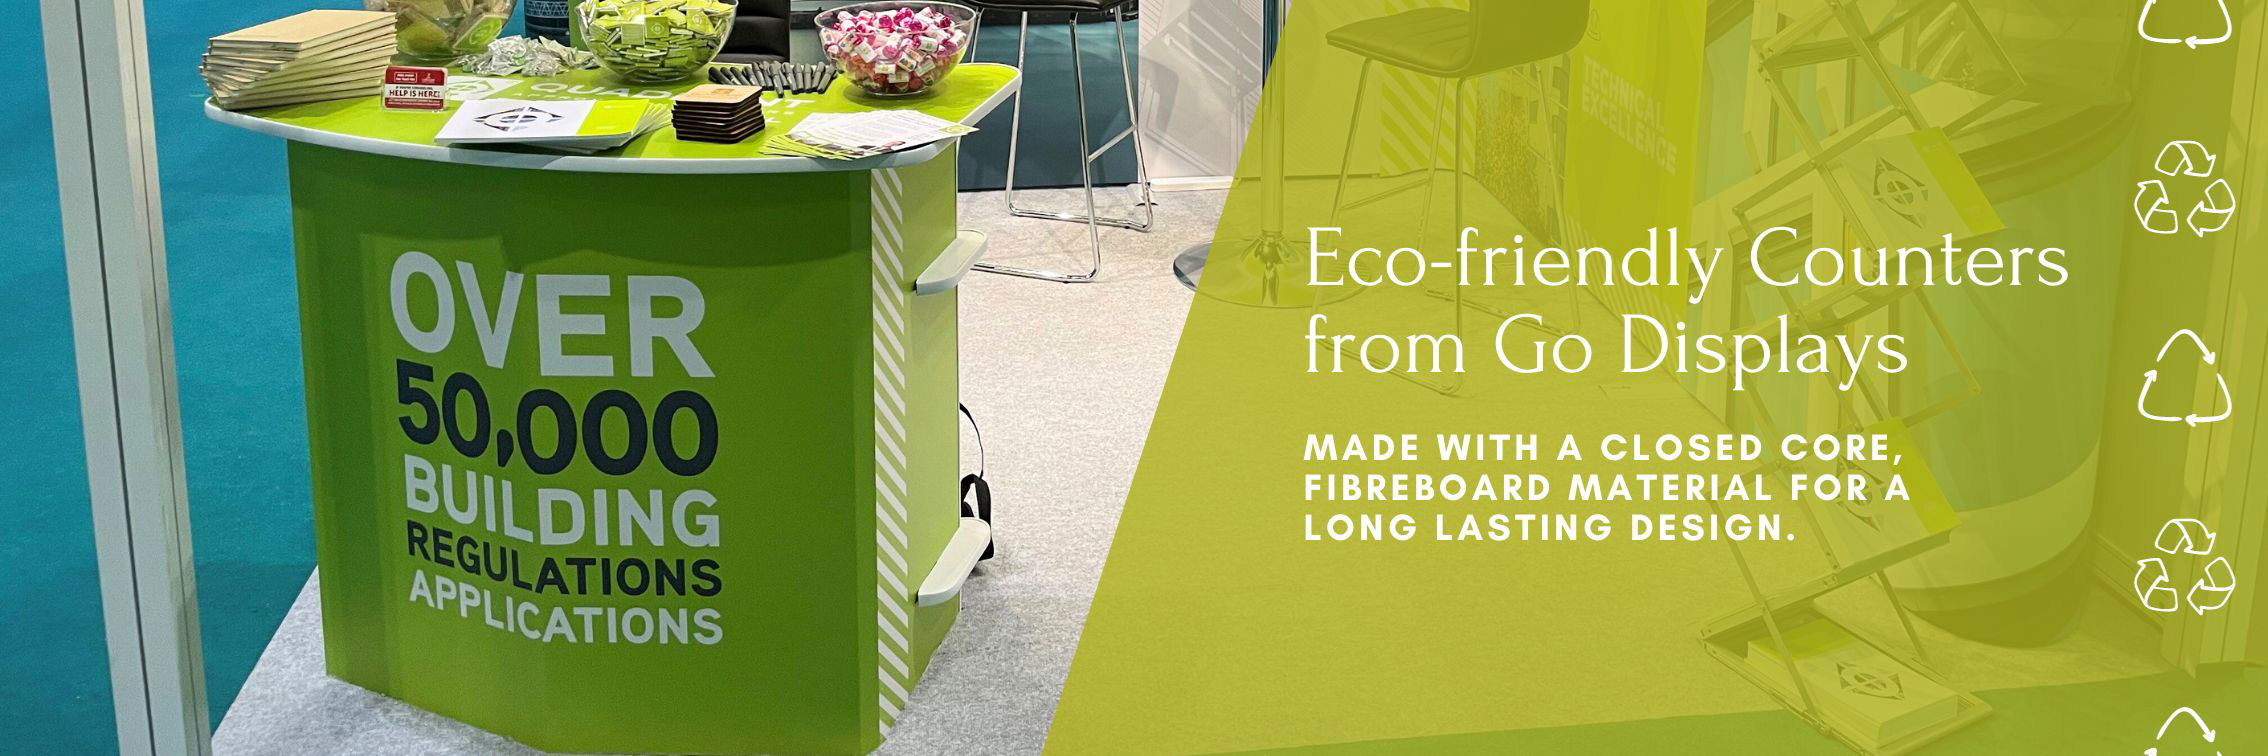 Eco-friendly exhibition counter